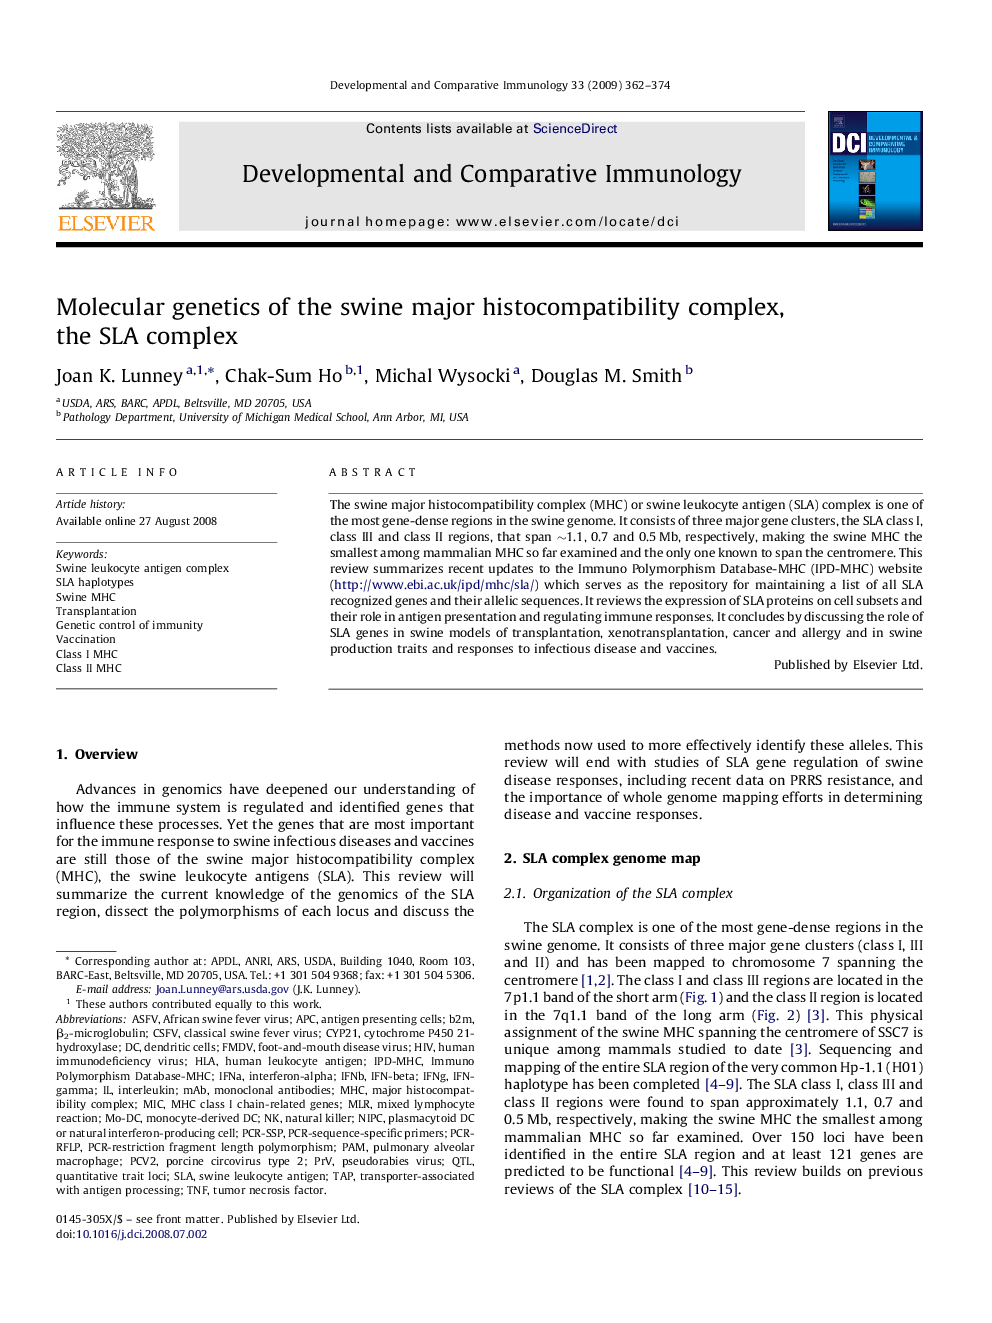 Molecular genetics of the swine major histocompatibility complex, the SLA complex